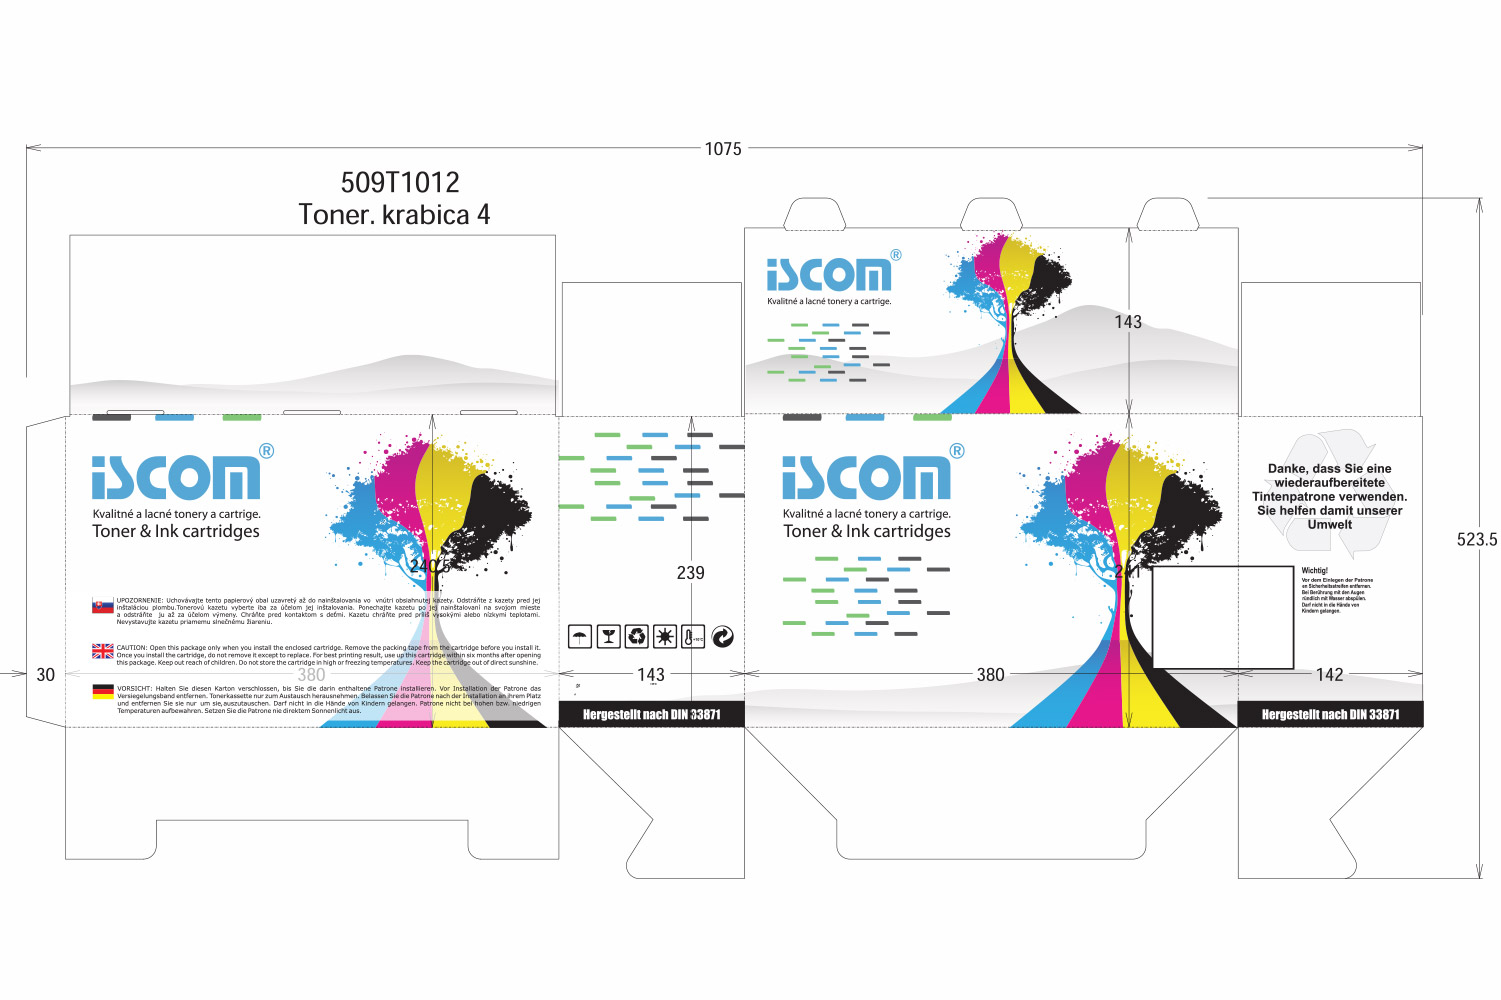 Iscom, corporate identity image